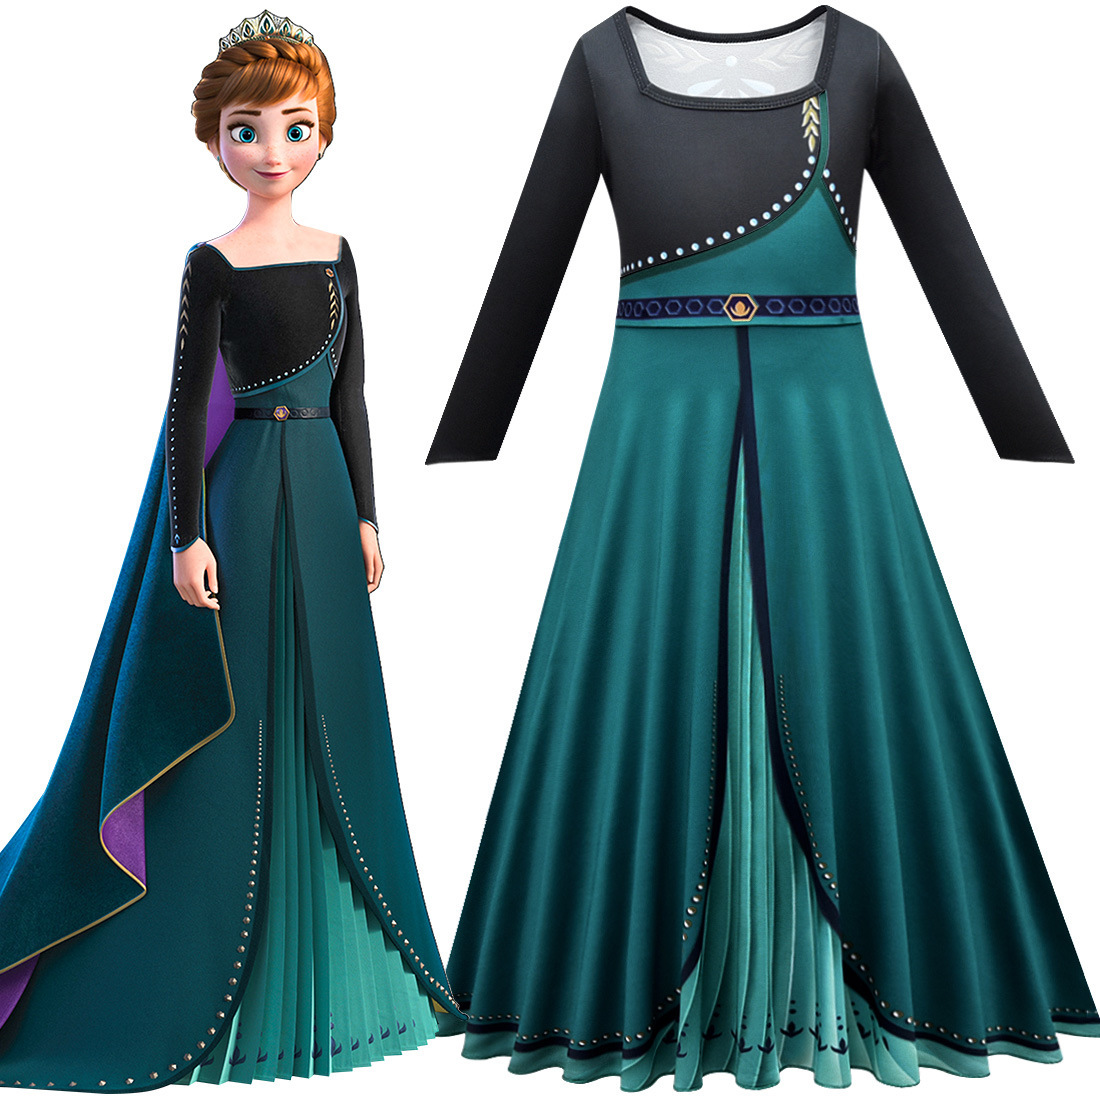 Đầm Công Chúa Anna Trong Phim Frozen 2